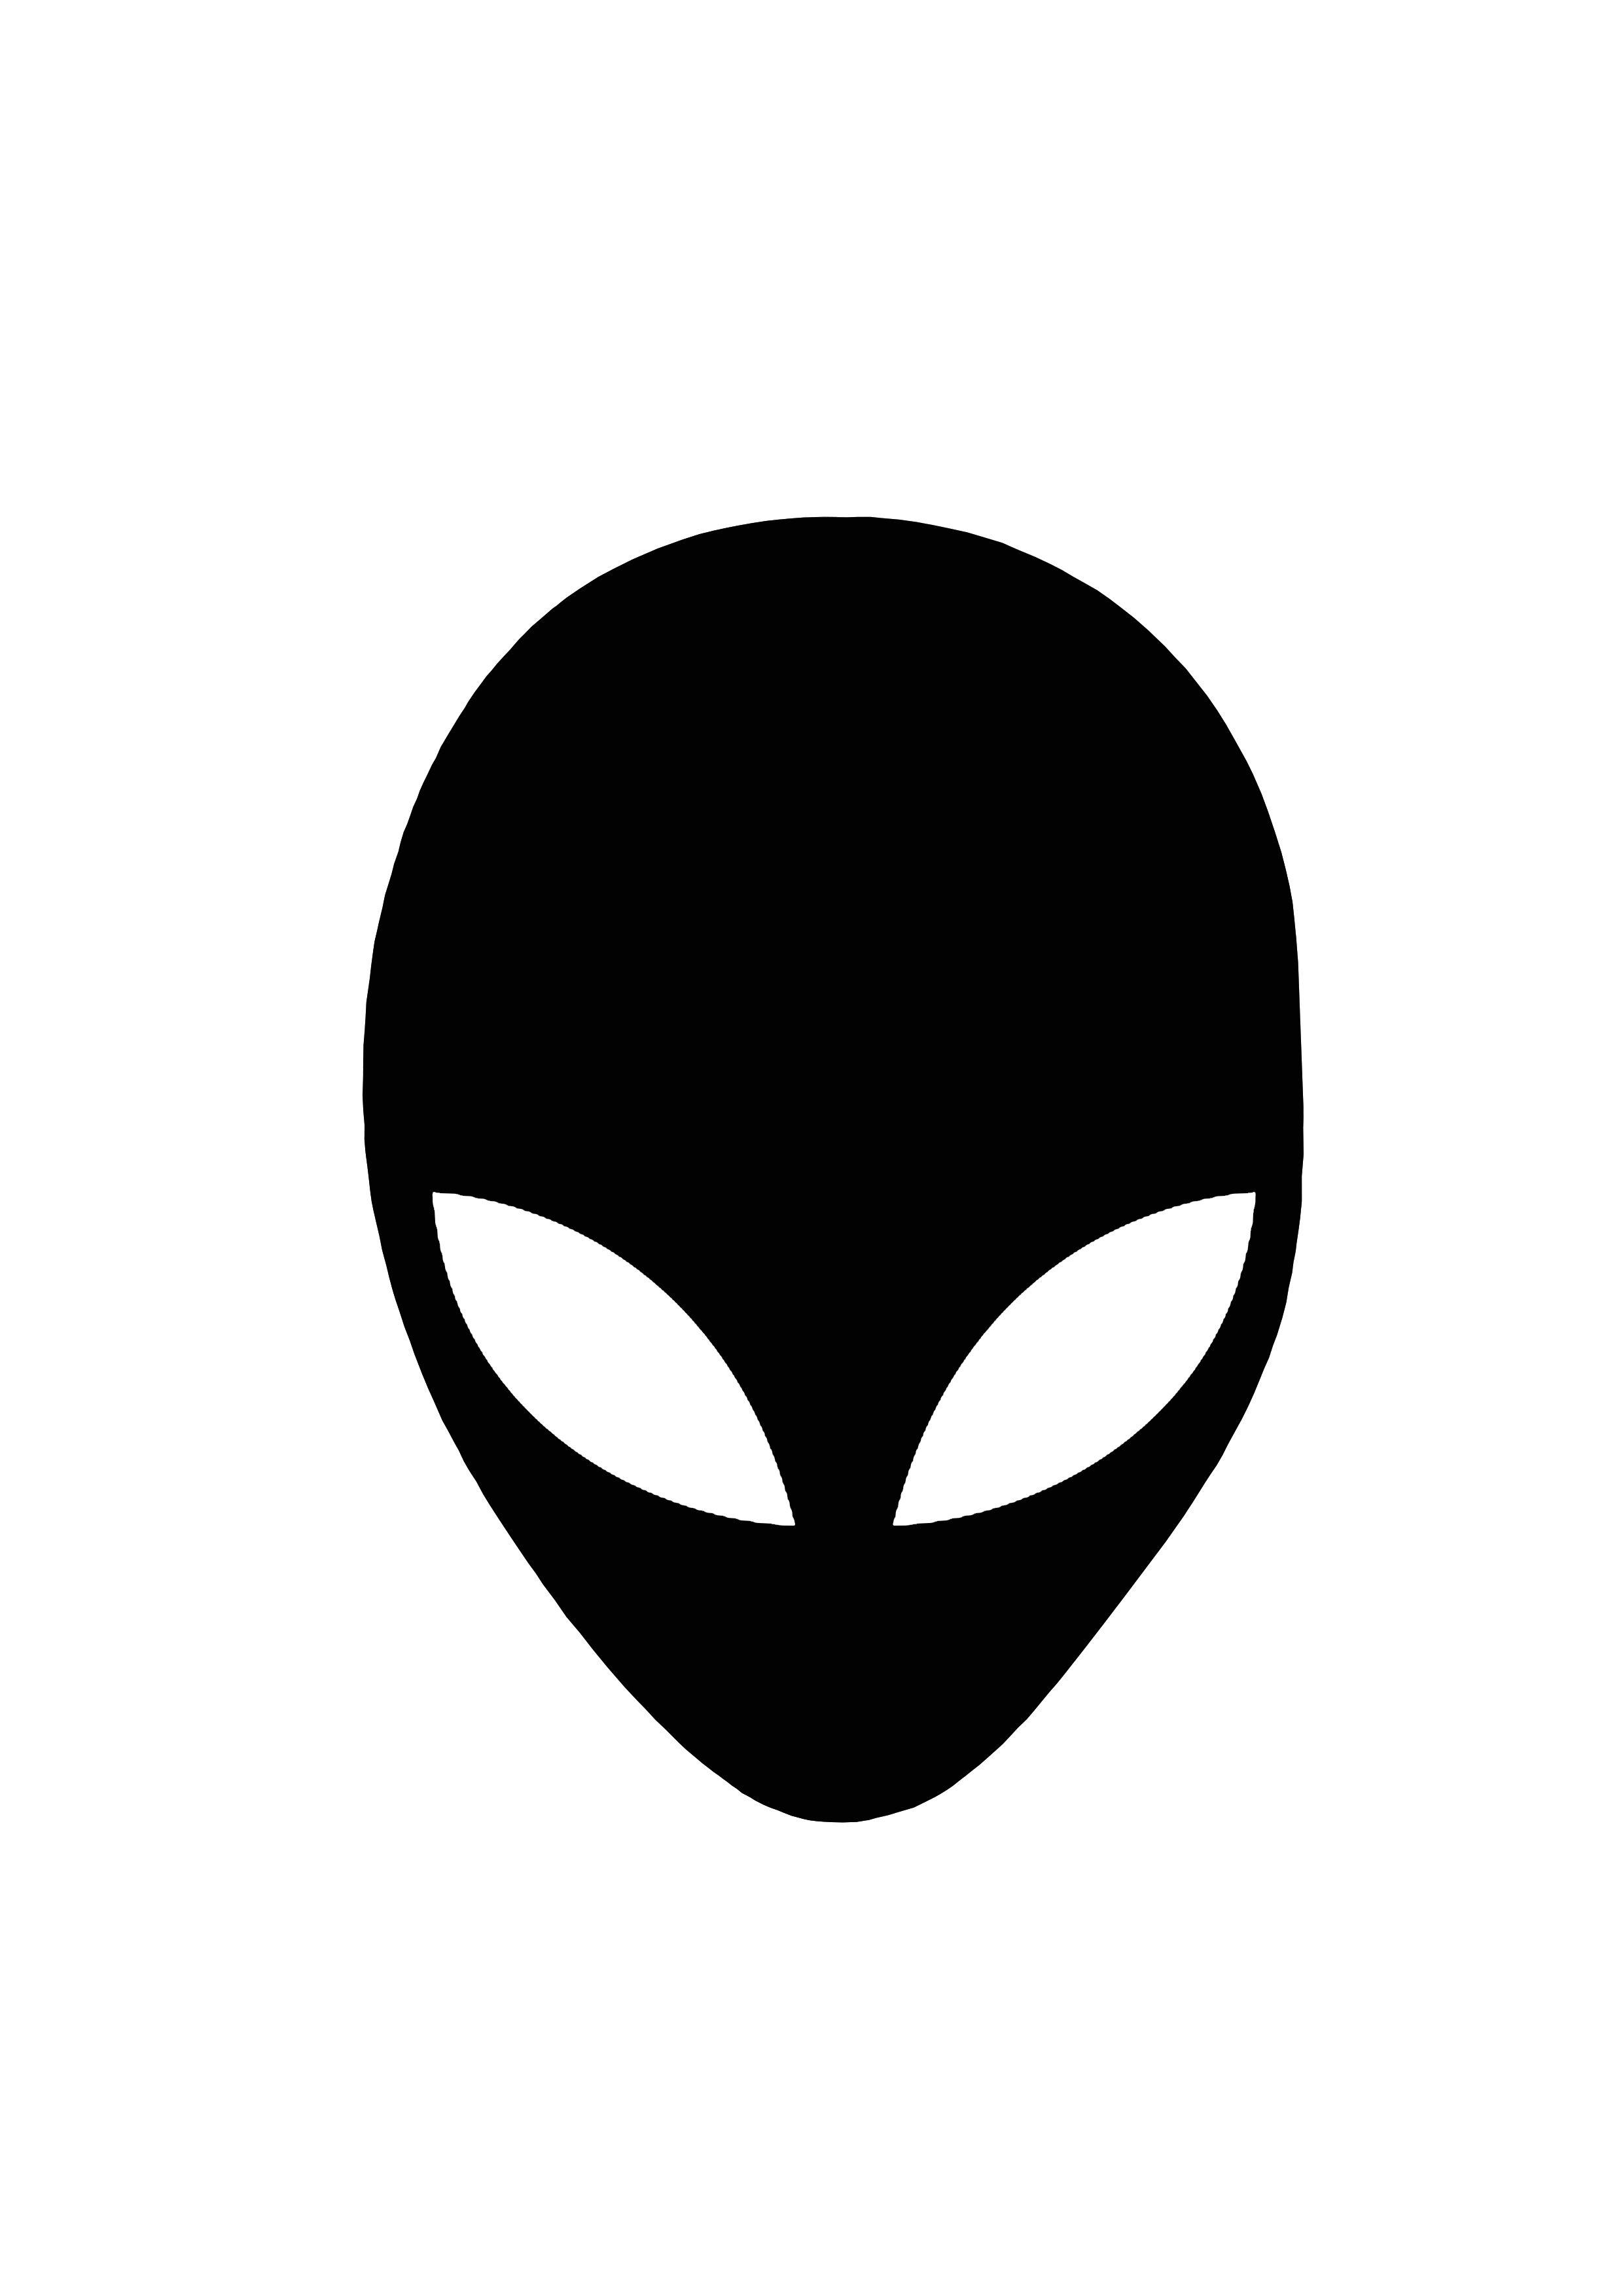 Alien Face Logo - Alien Head Vector.com. Free for personal use Alien